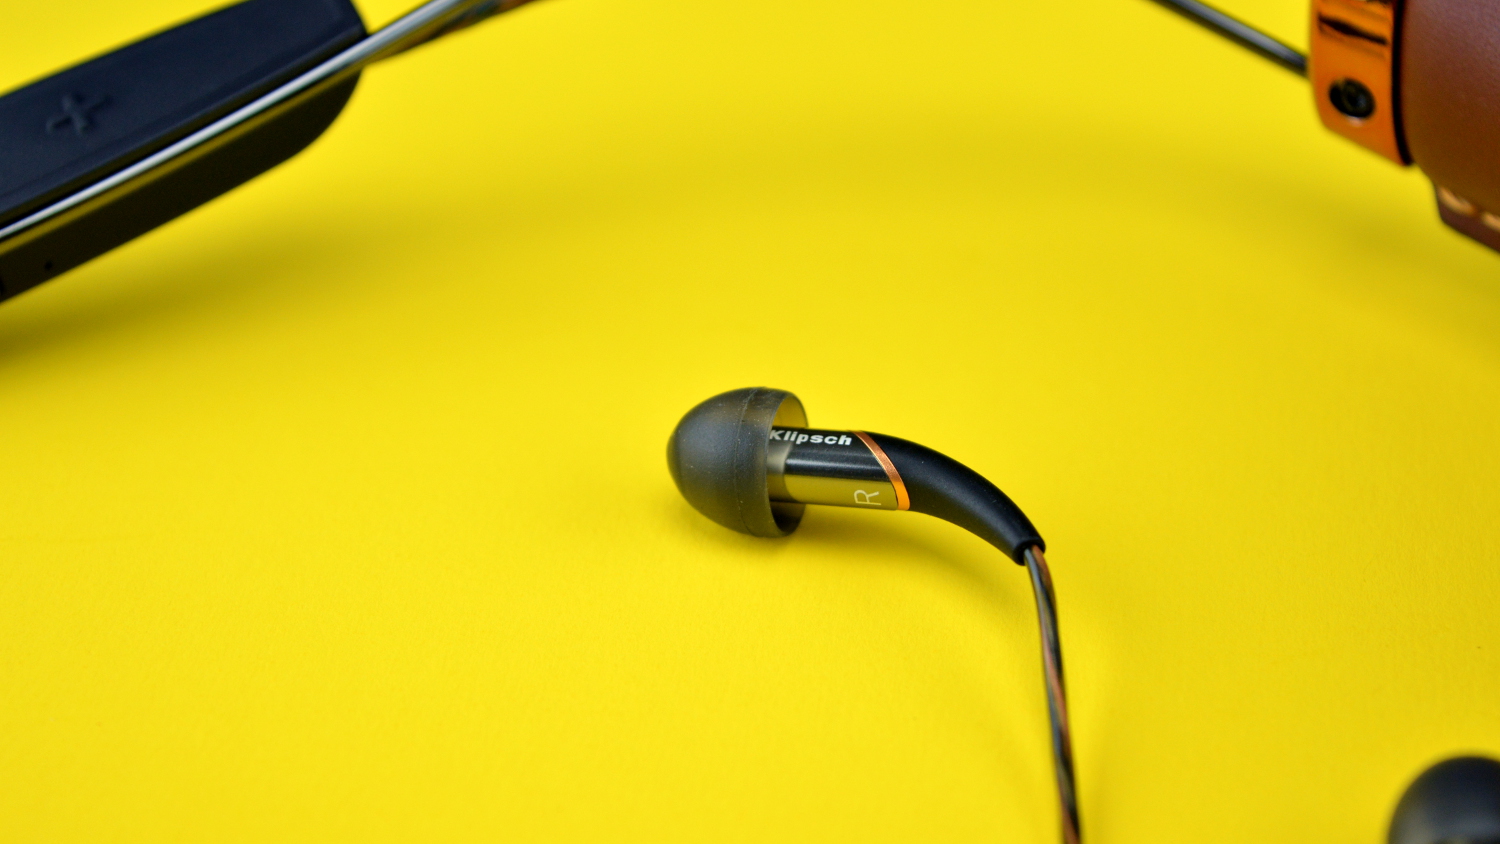 Klipsch X12 Neckband In-Ear Headphones Review - Headphone Review